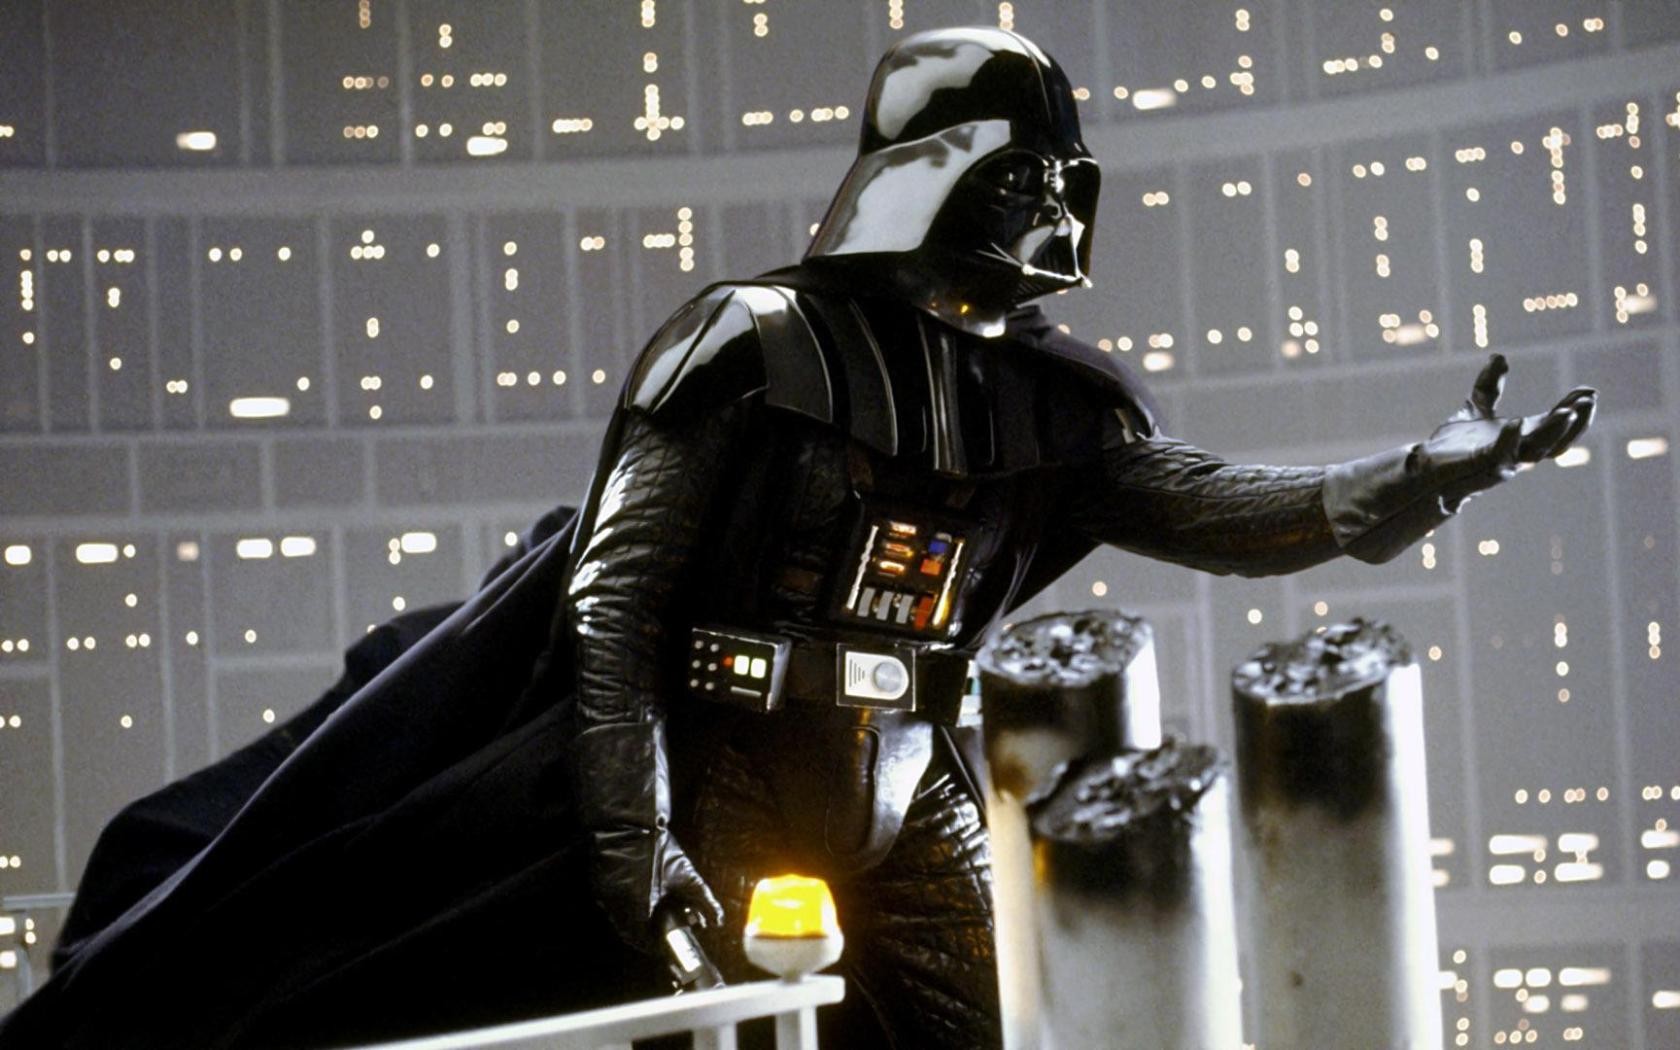 Star Wars Darth Vader Sith Movies Star Wars Villains The Empire Strikes Back 1680x1050